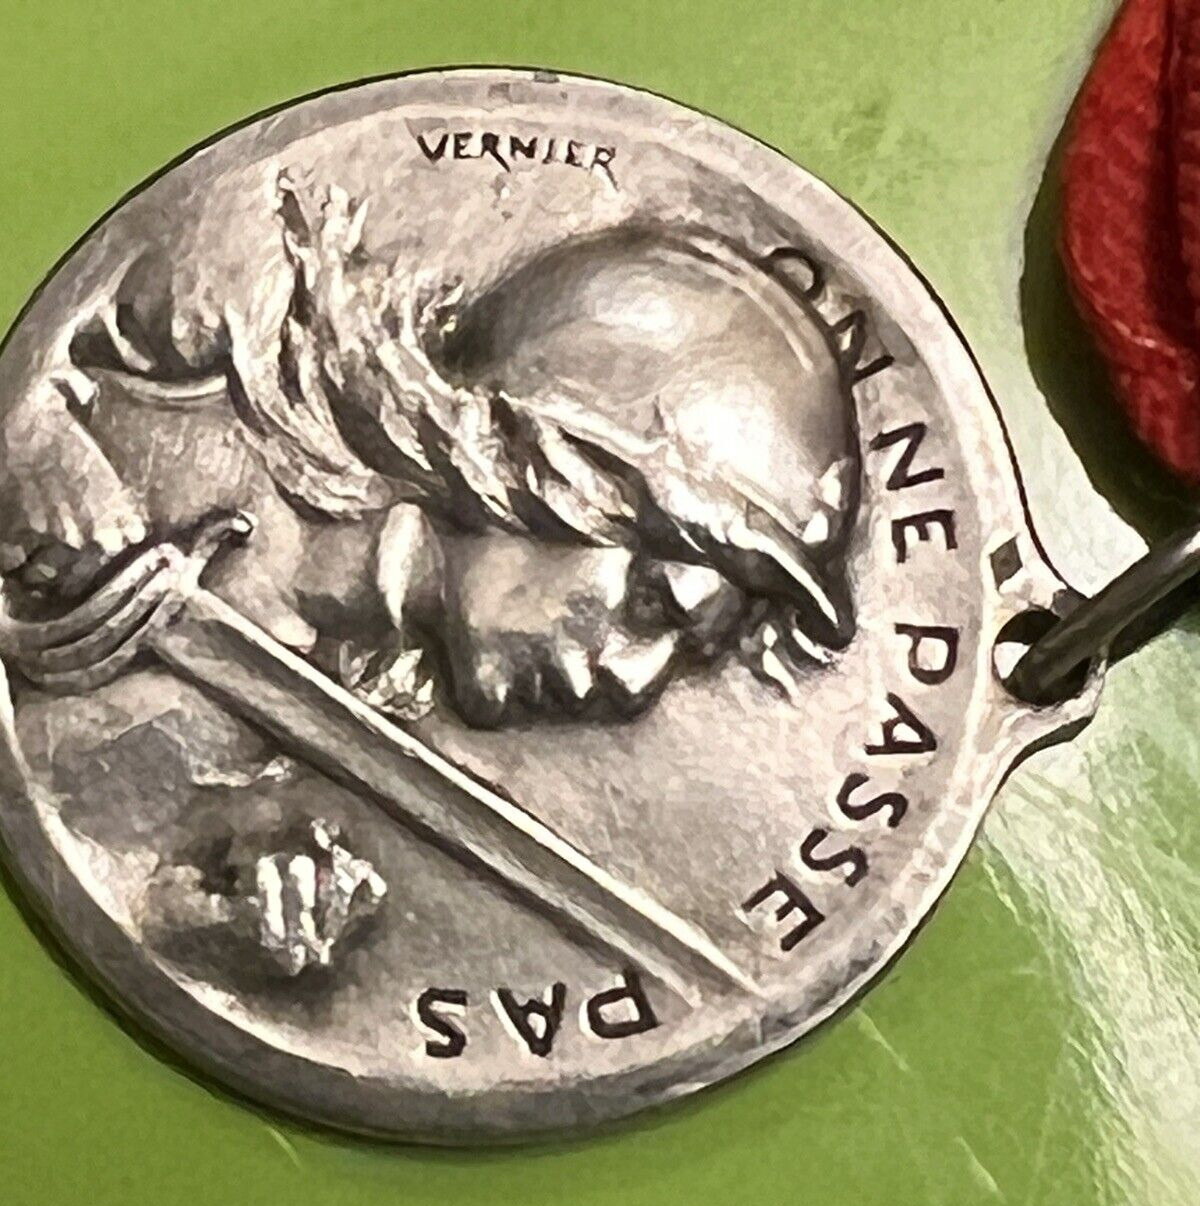 French WW1 Verdun medal 1916 World War One France - ORIGINAL